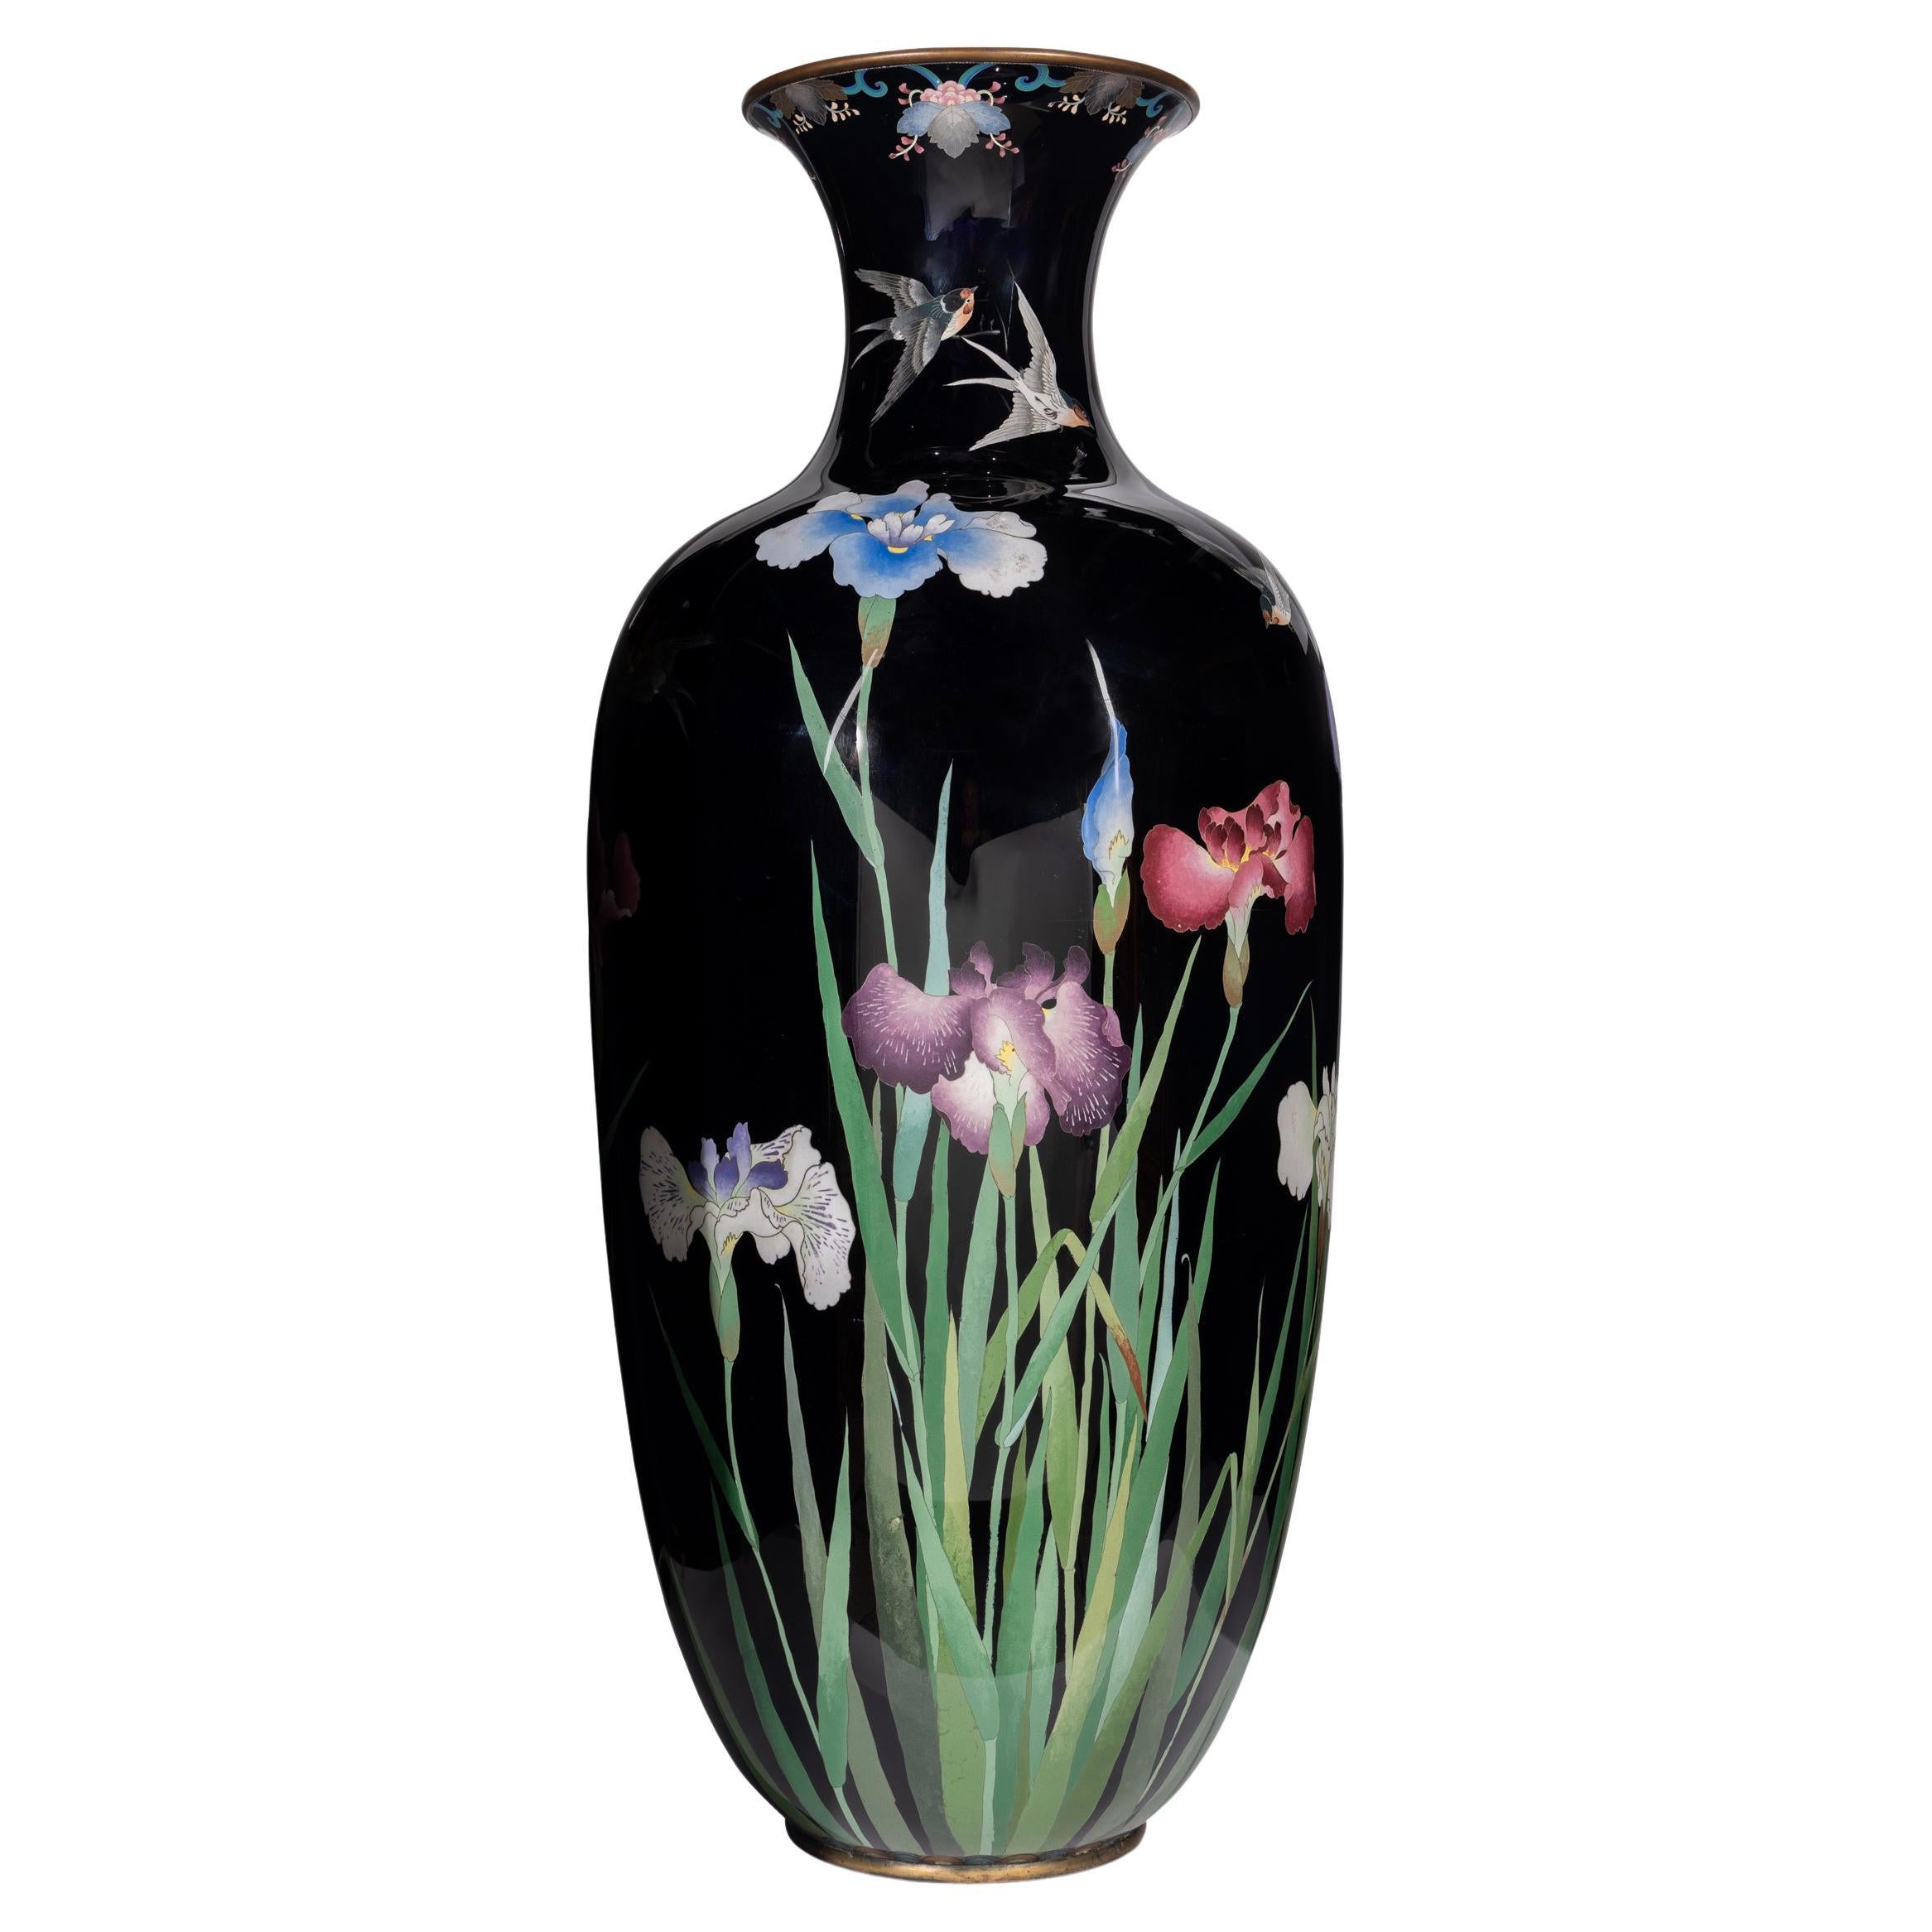 Palace-Sized Japanese Cloisonne Enamel Vase Adorned with Irises and Sparrows